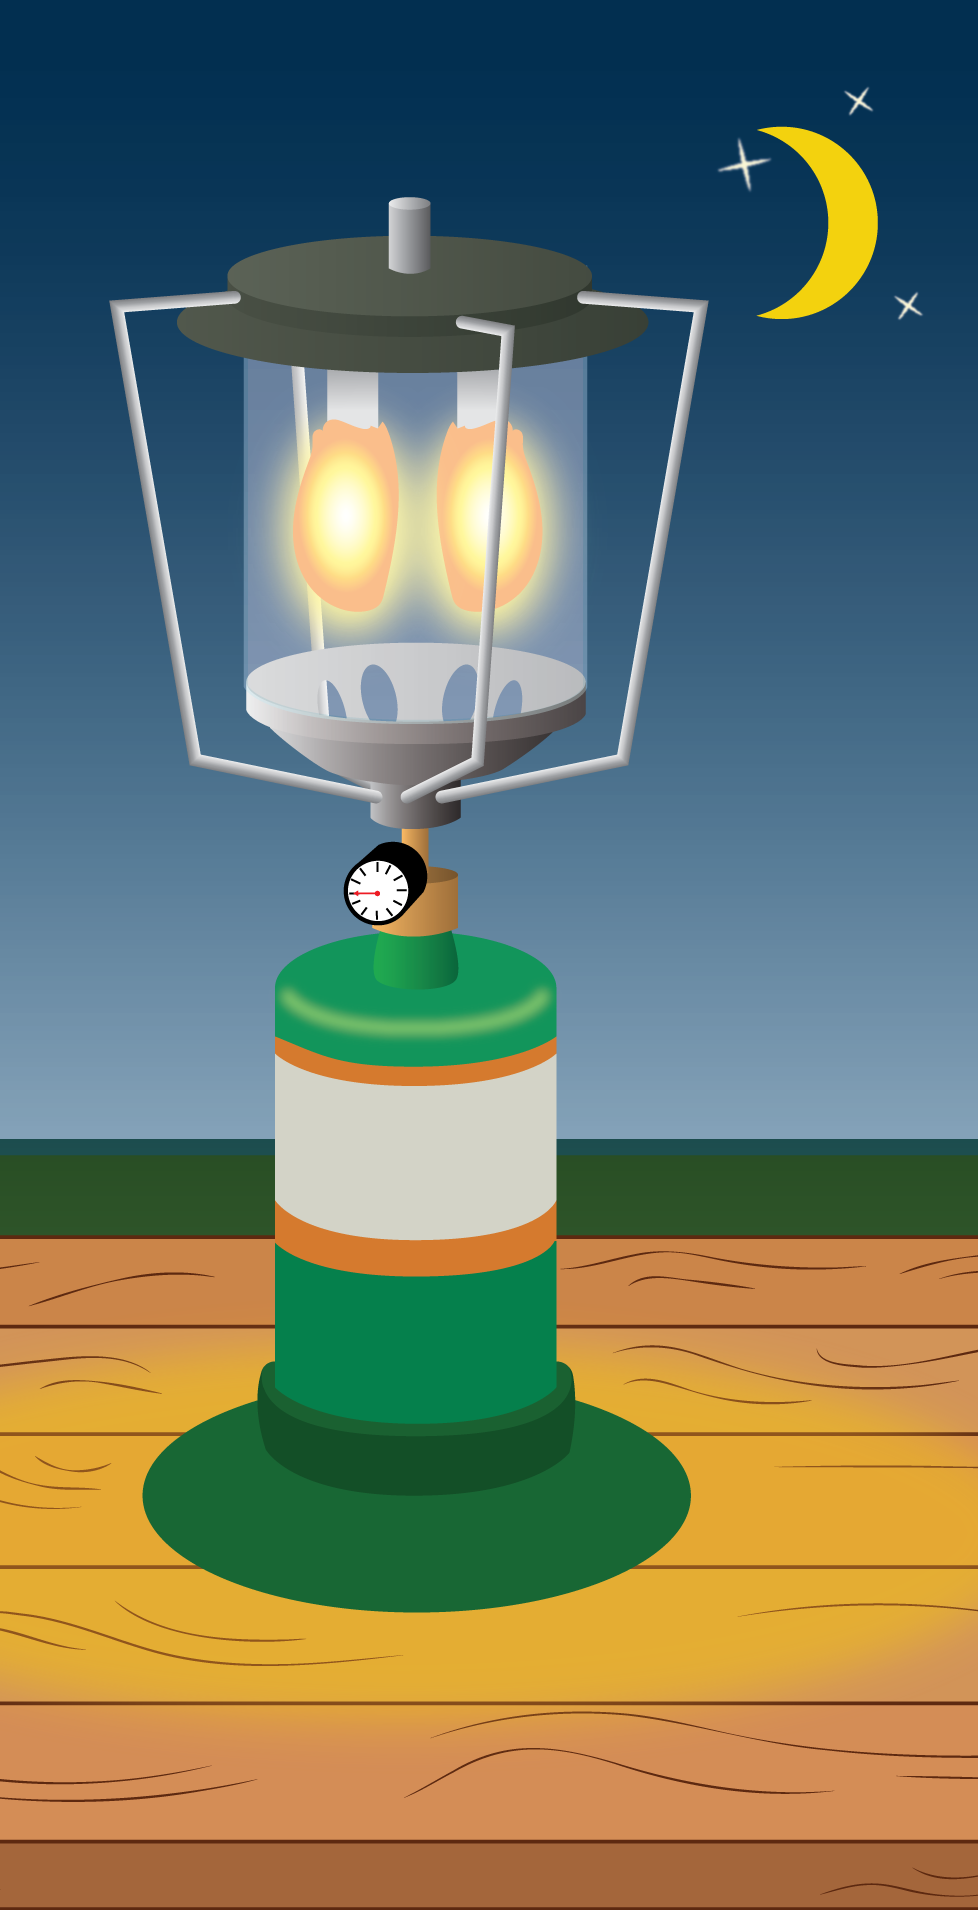 Digital illustration of a camping lantern